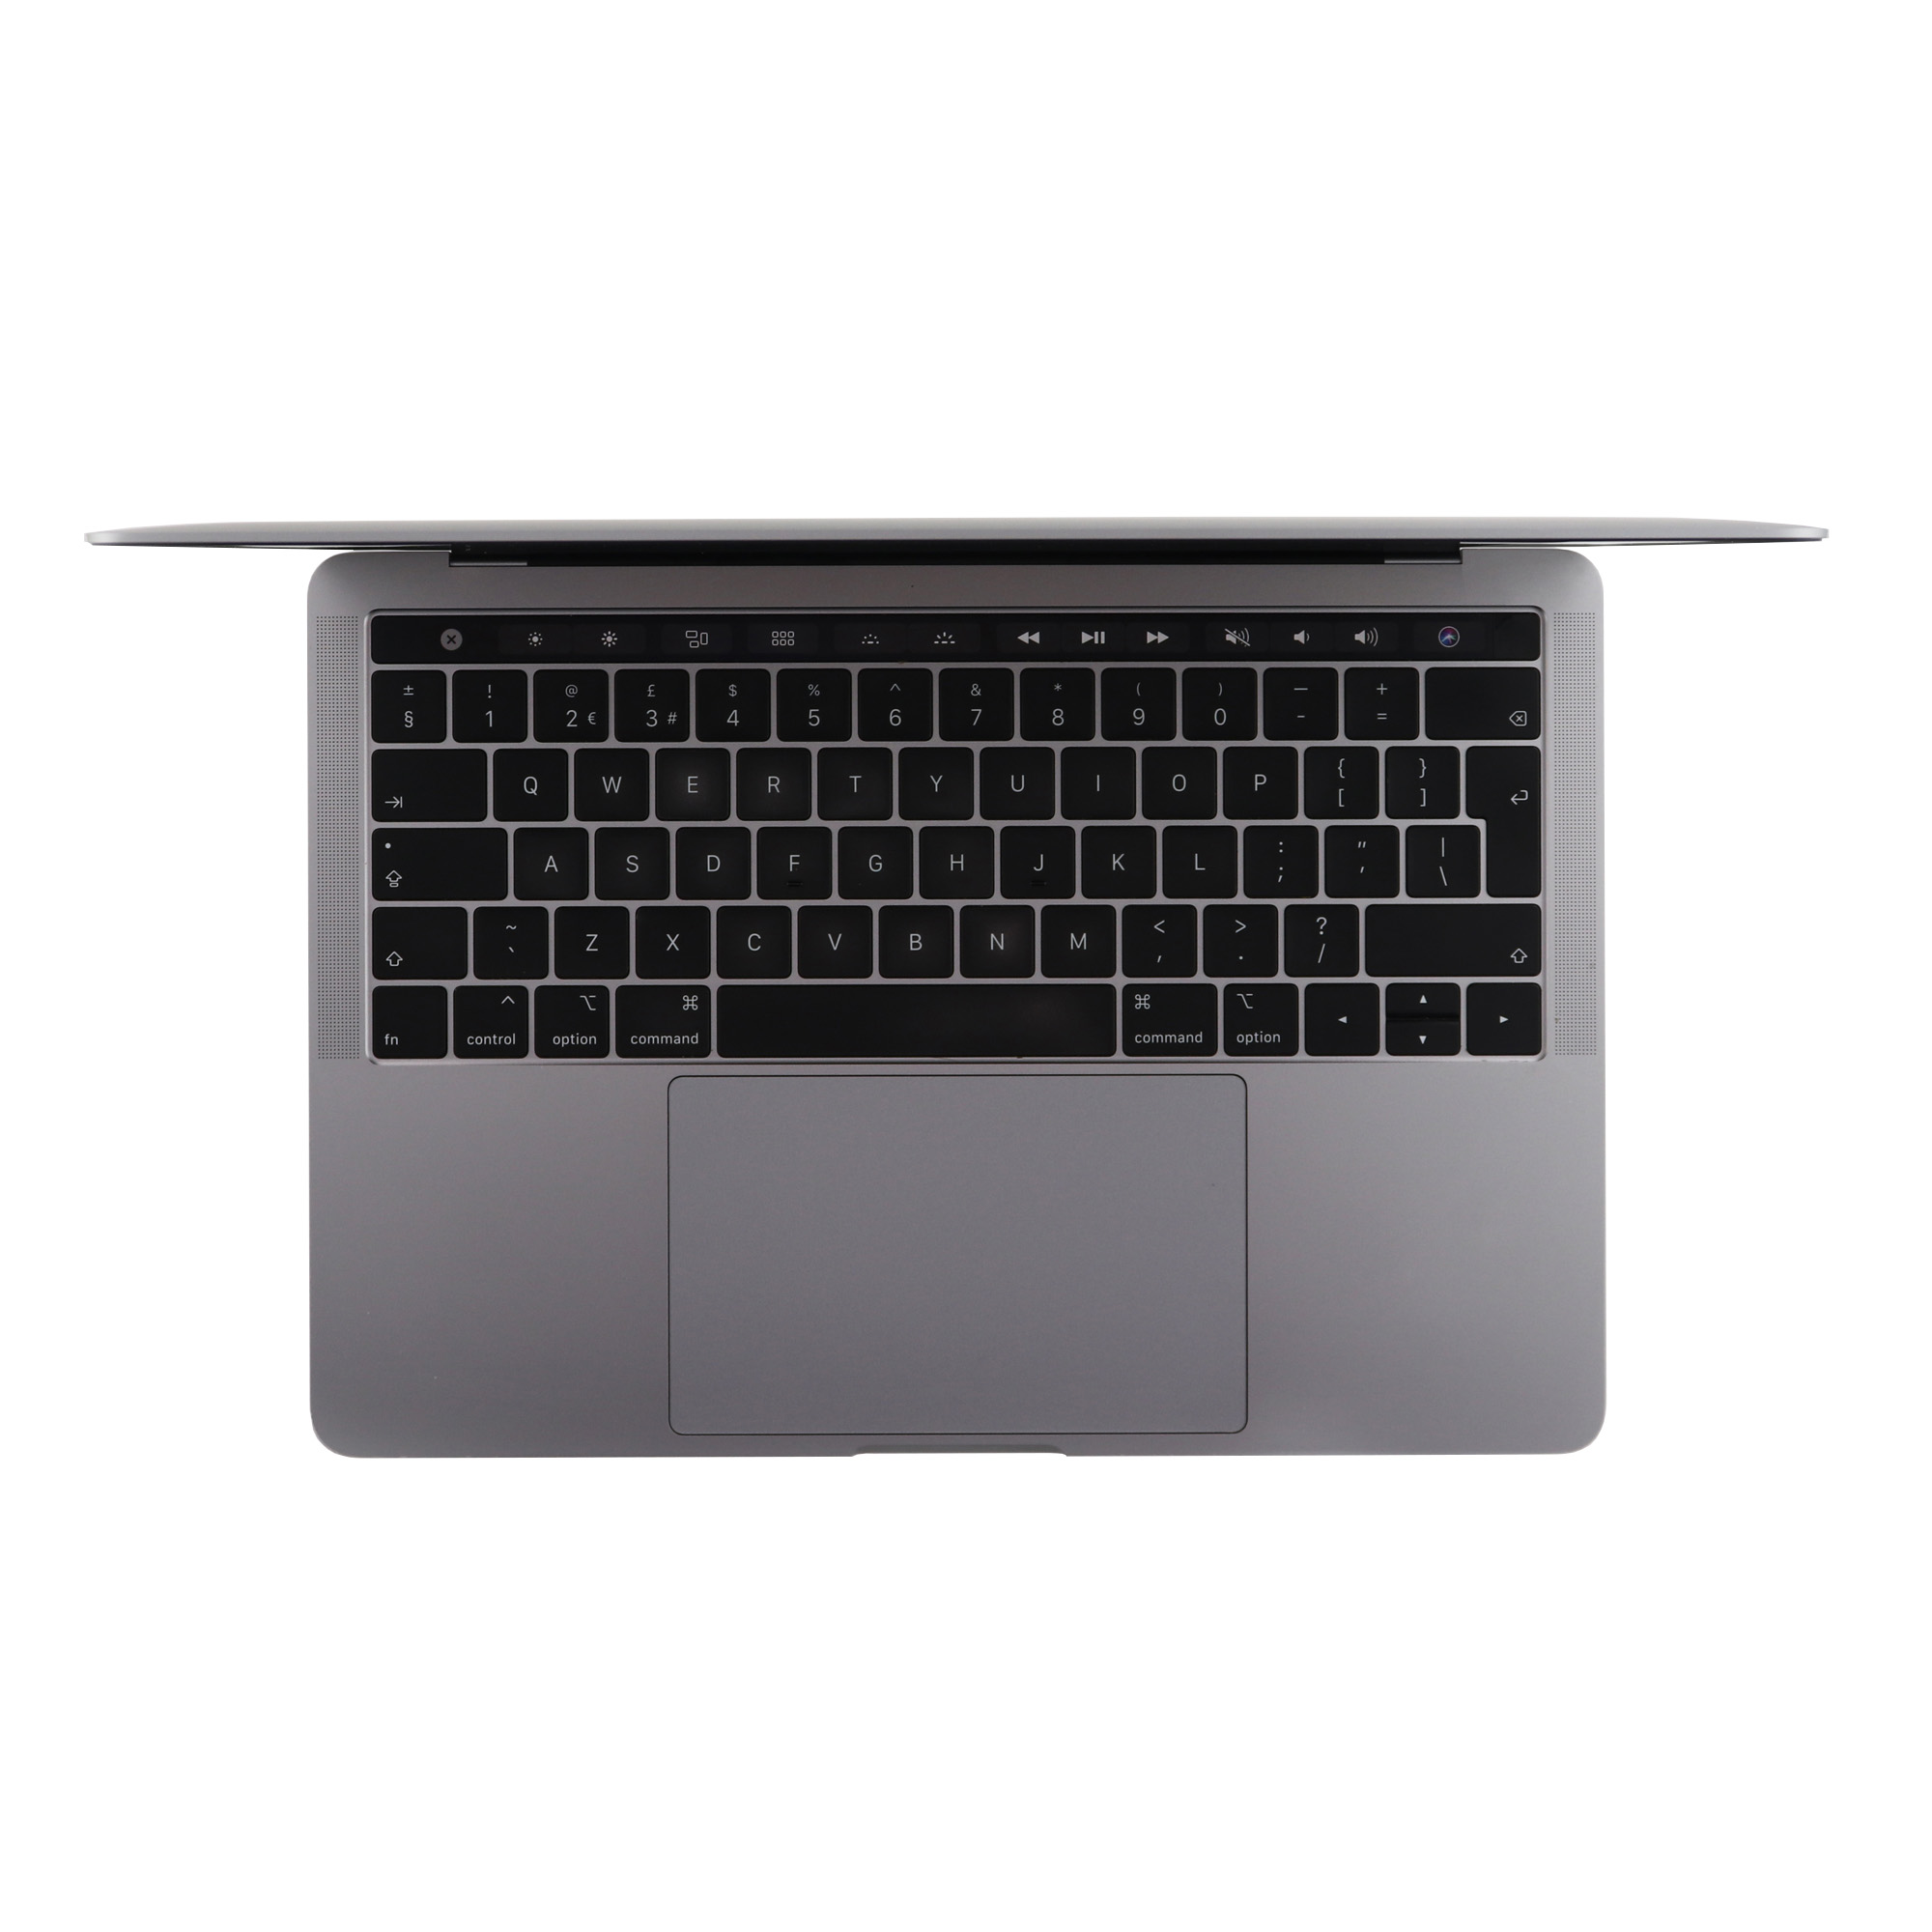 2020 Apple MacBook Pro 13-inch M1 8GB 256GB - Space Grey - MacFinder